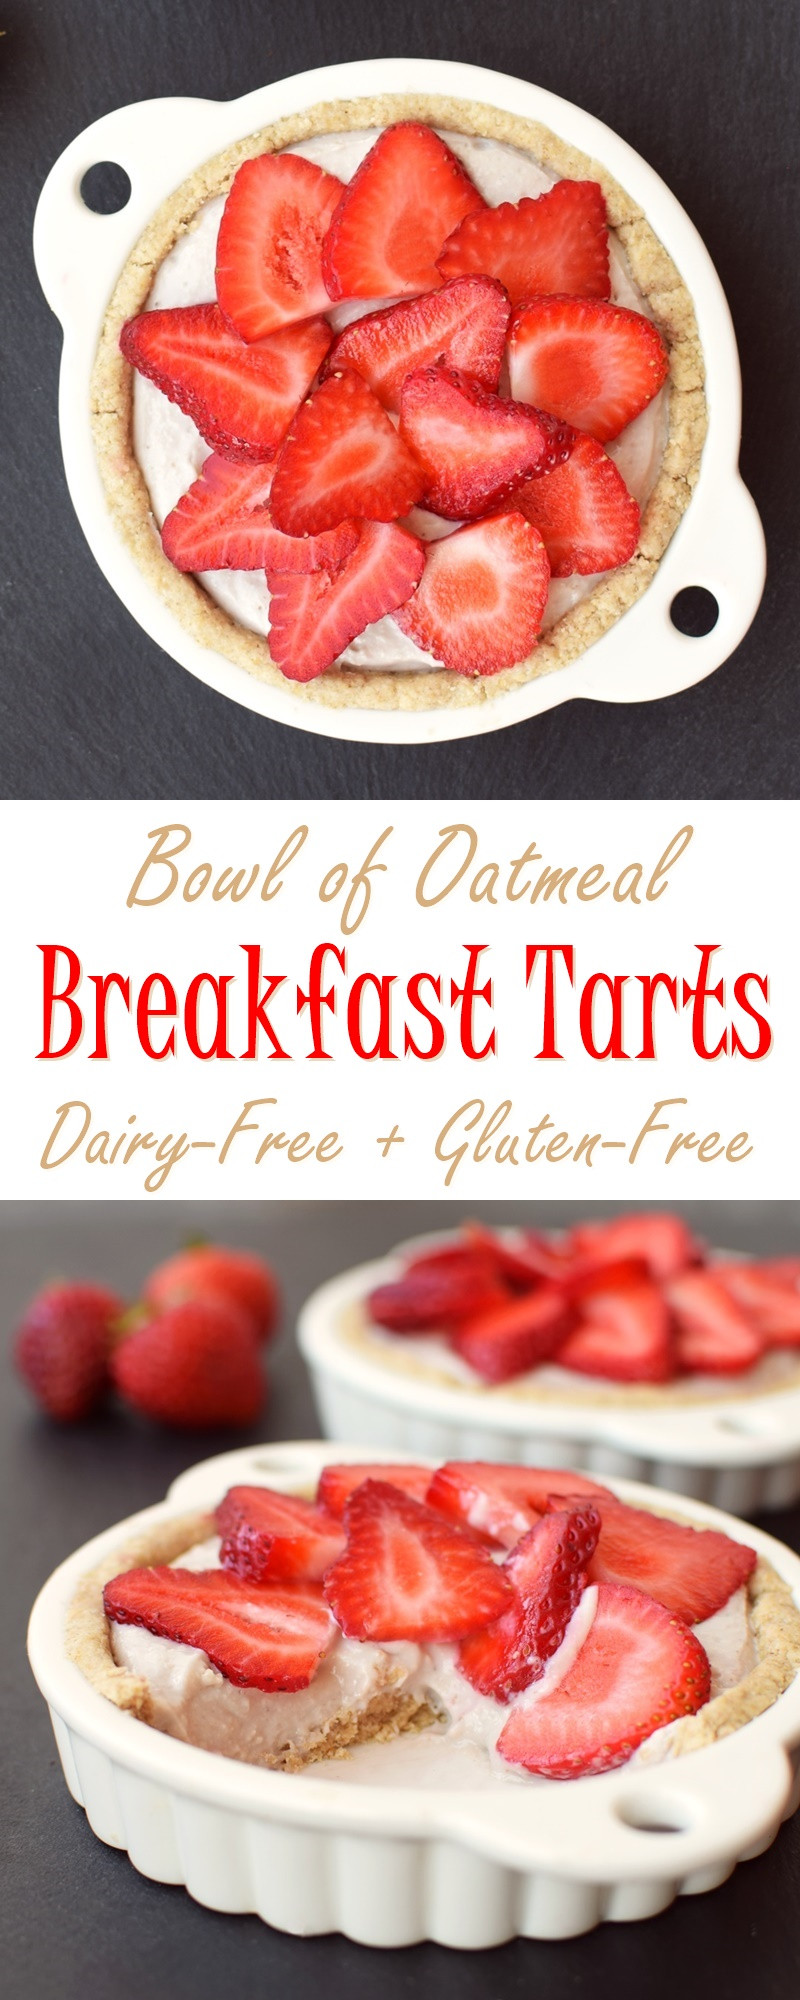 Dairy Free Breakfast Recipes
 Dairy Free Breakfast Tarts Recipe with Oatmeal Crust